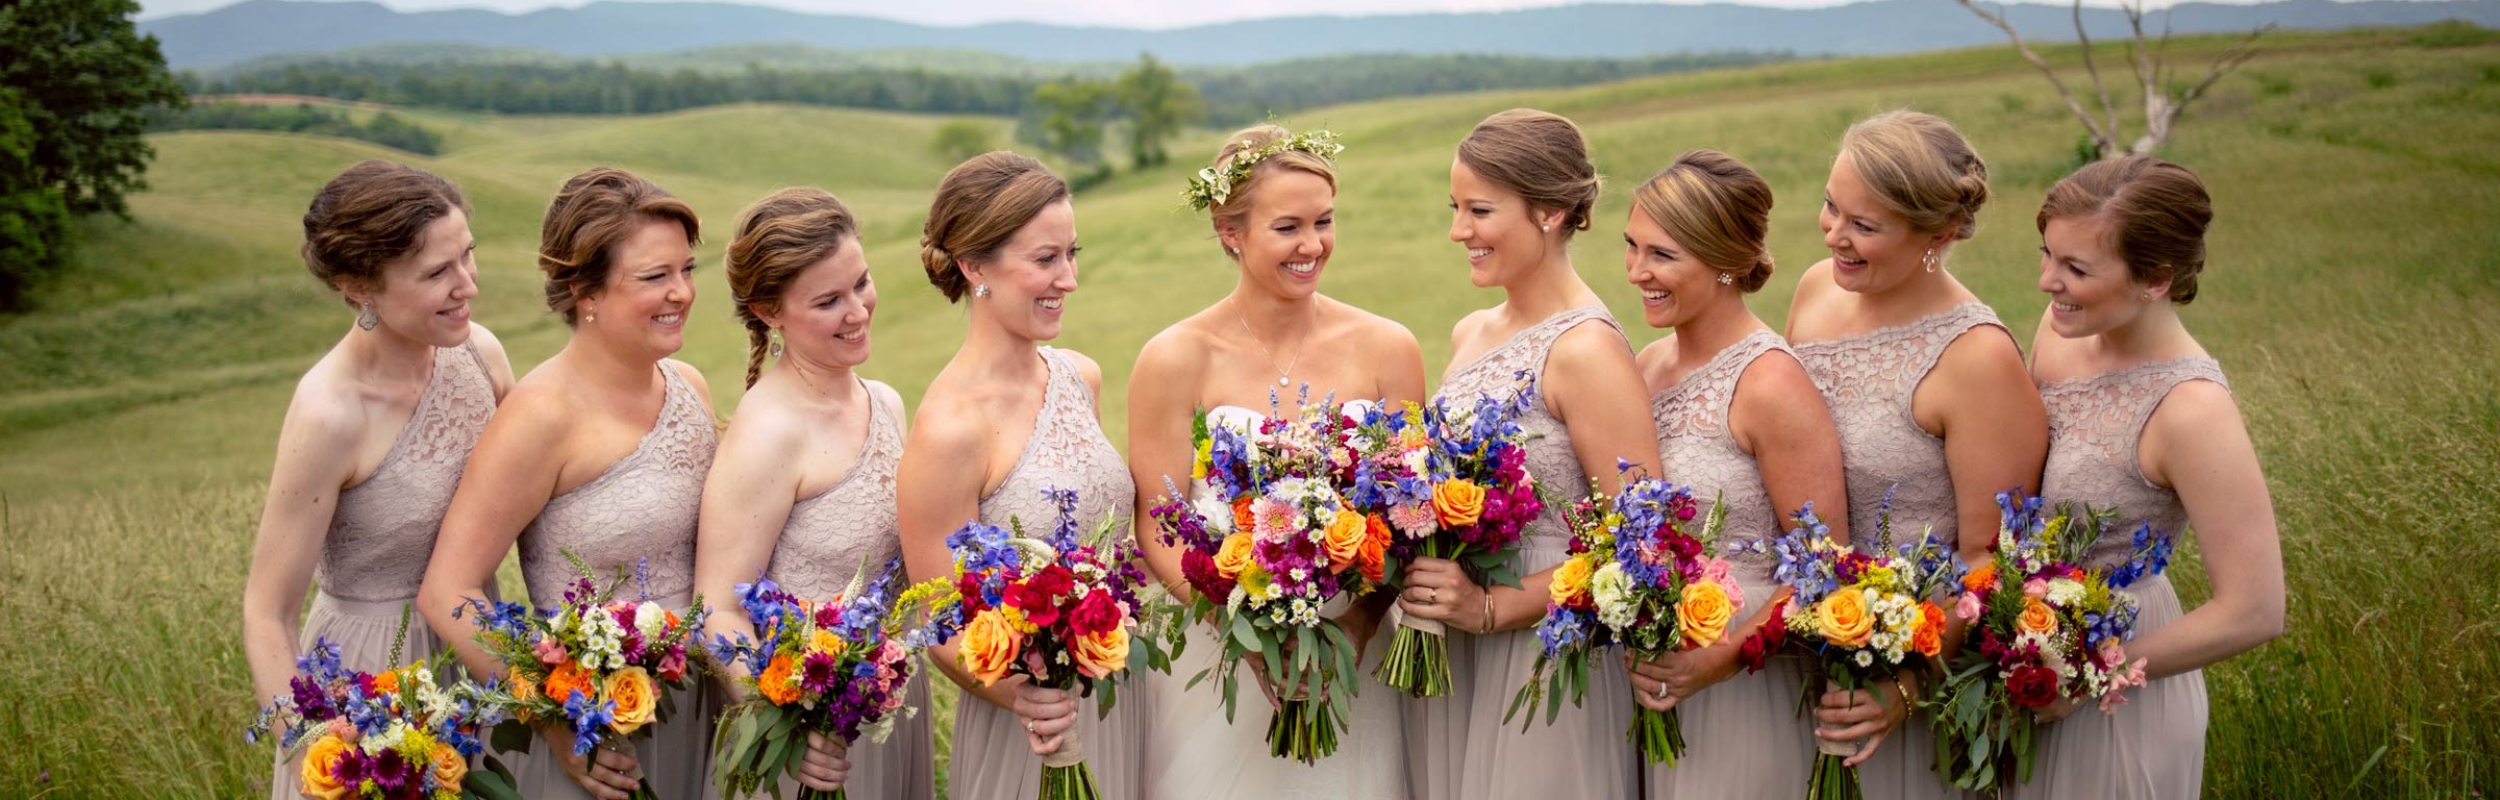 flower-vintage-bright-bridesmaids